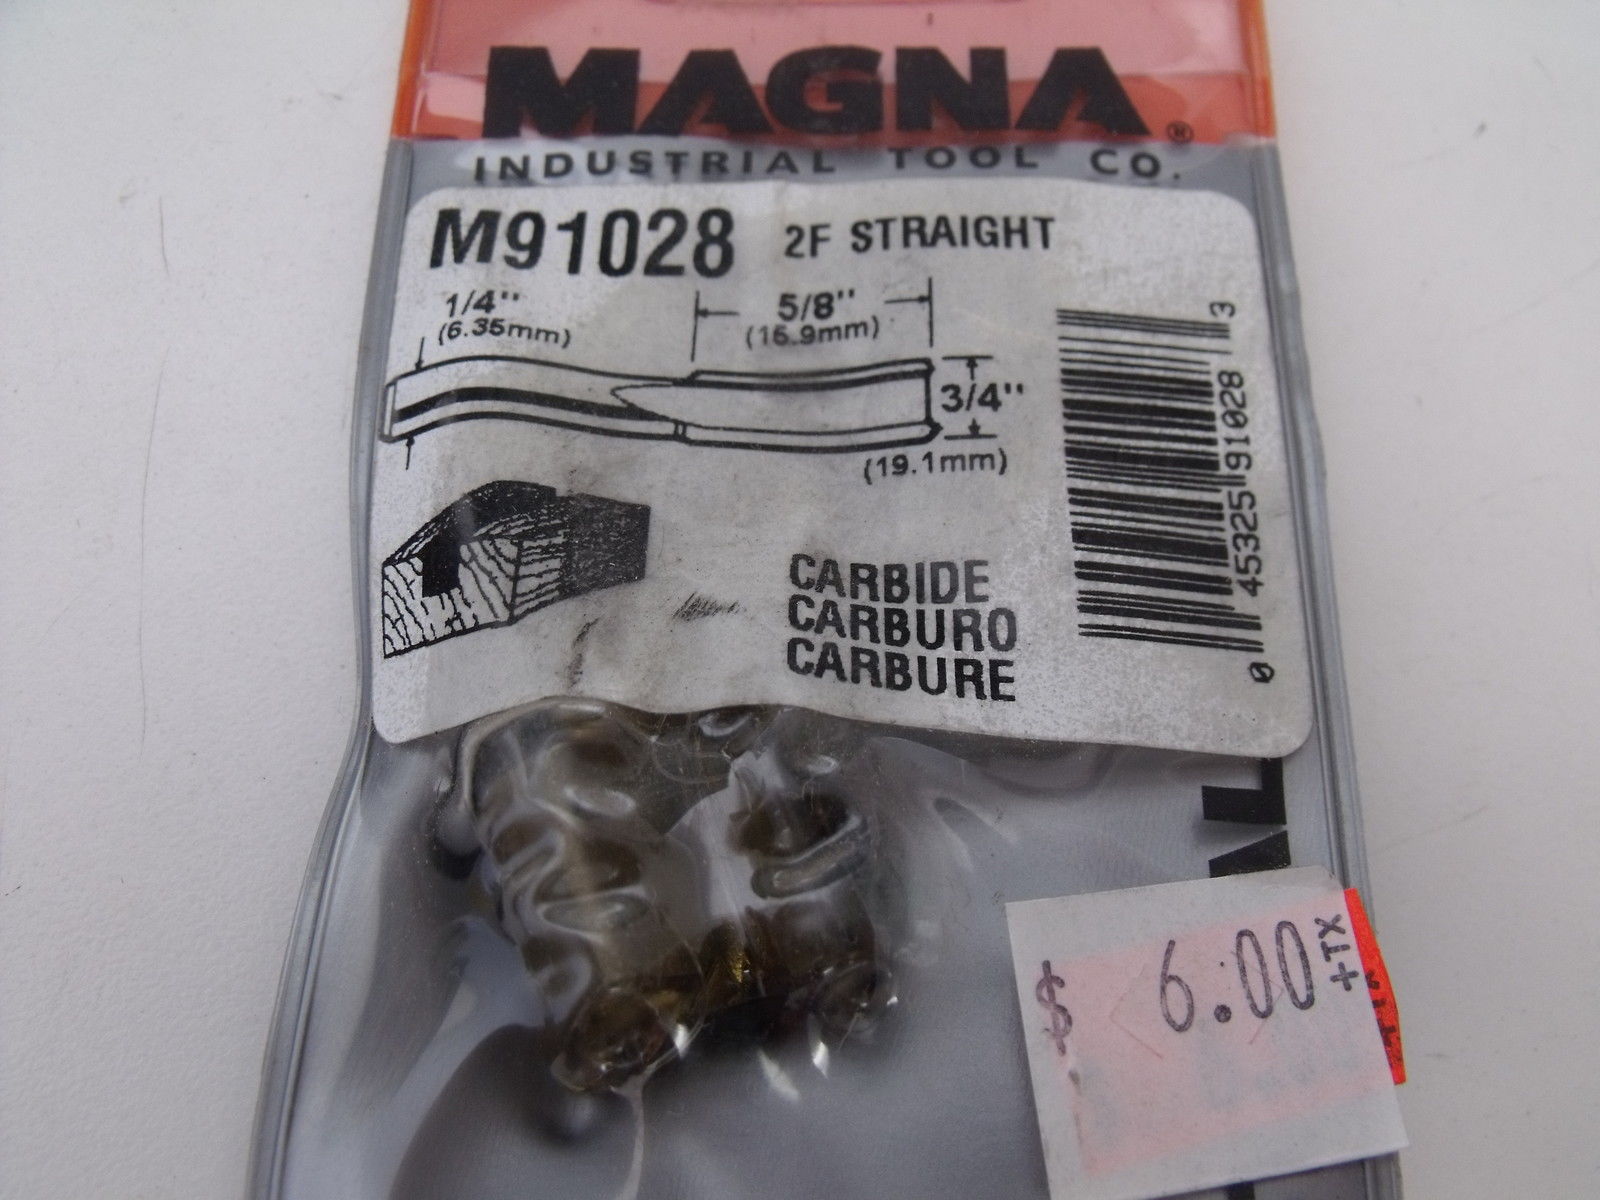 Magna Tool M91028 5/8'' x 3/4'' 2F Straight Router Bit 1/4" Shank USA